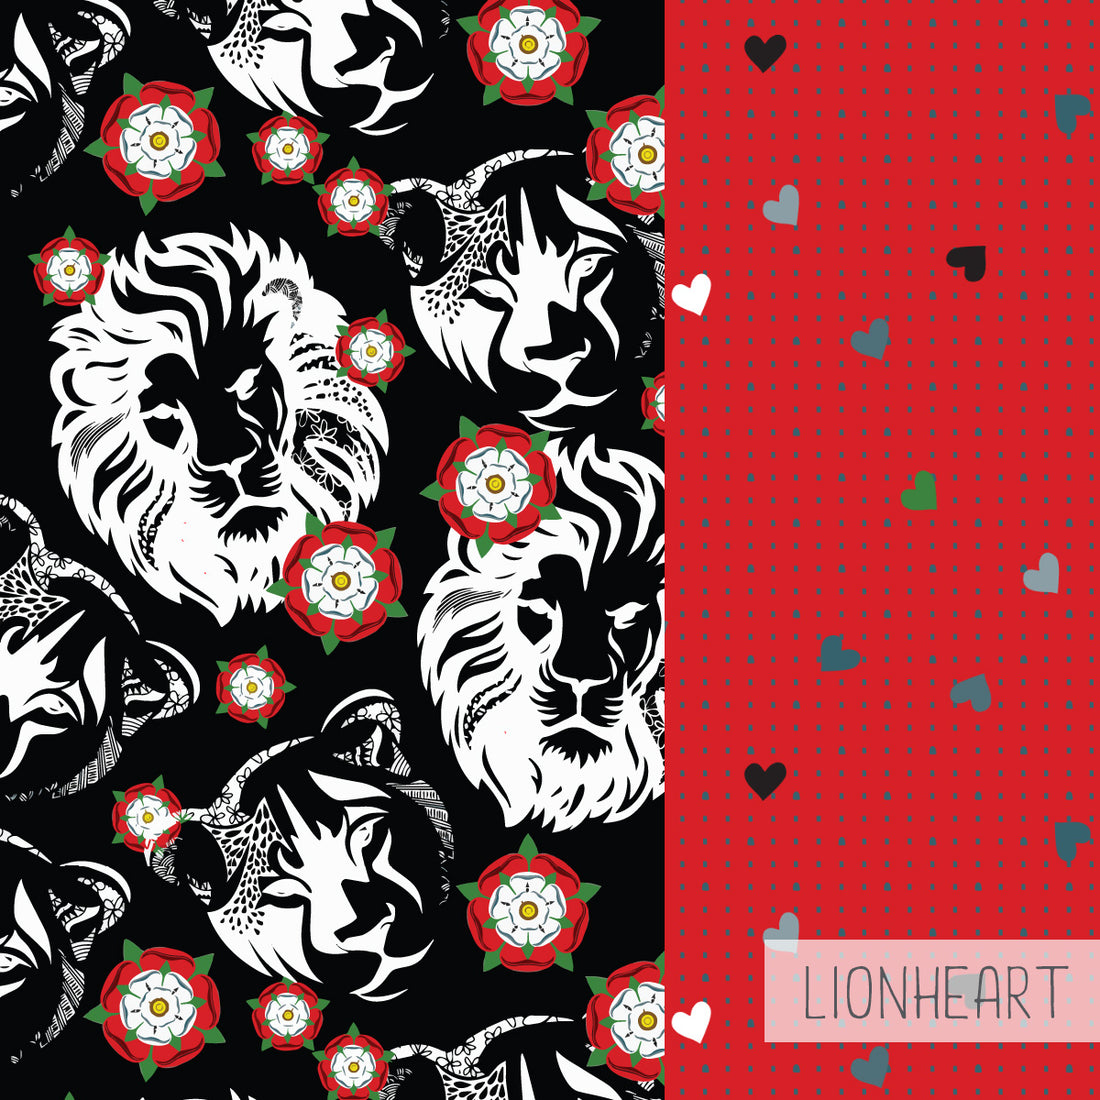 Skort | Lionheart